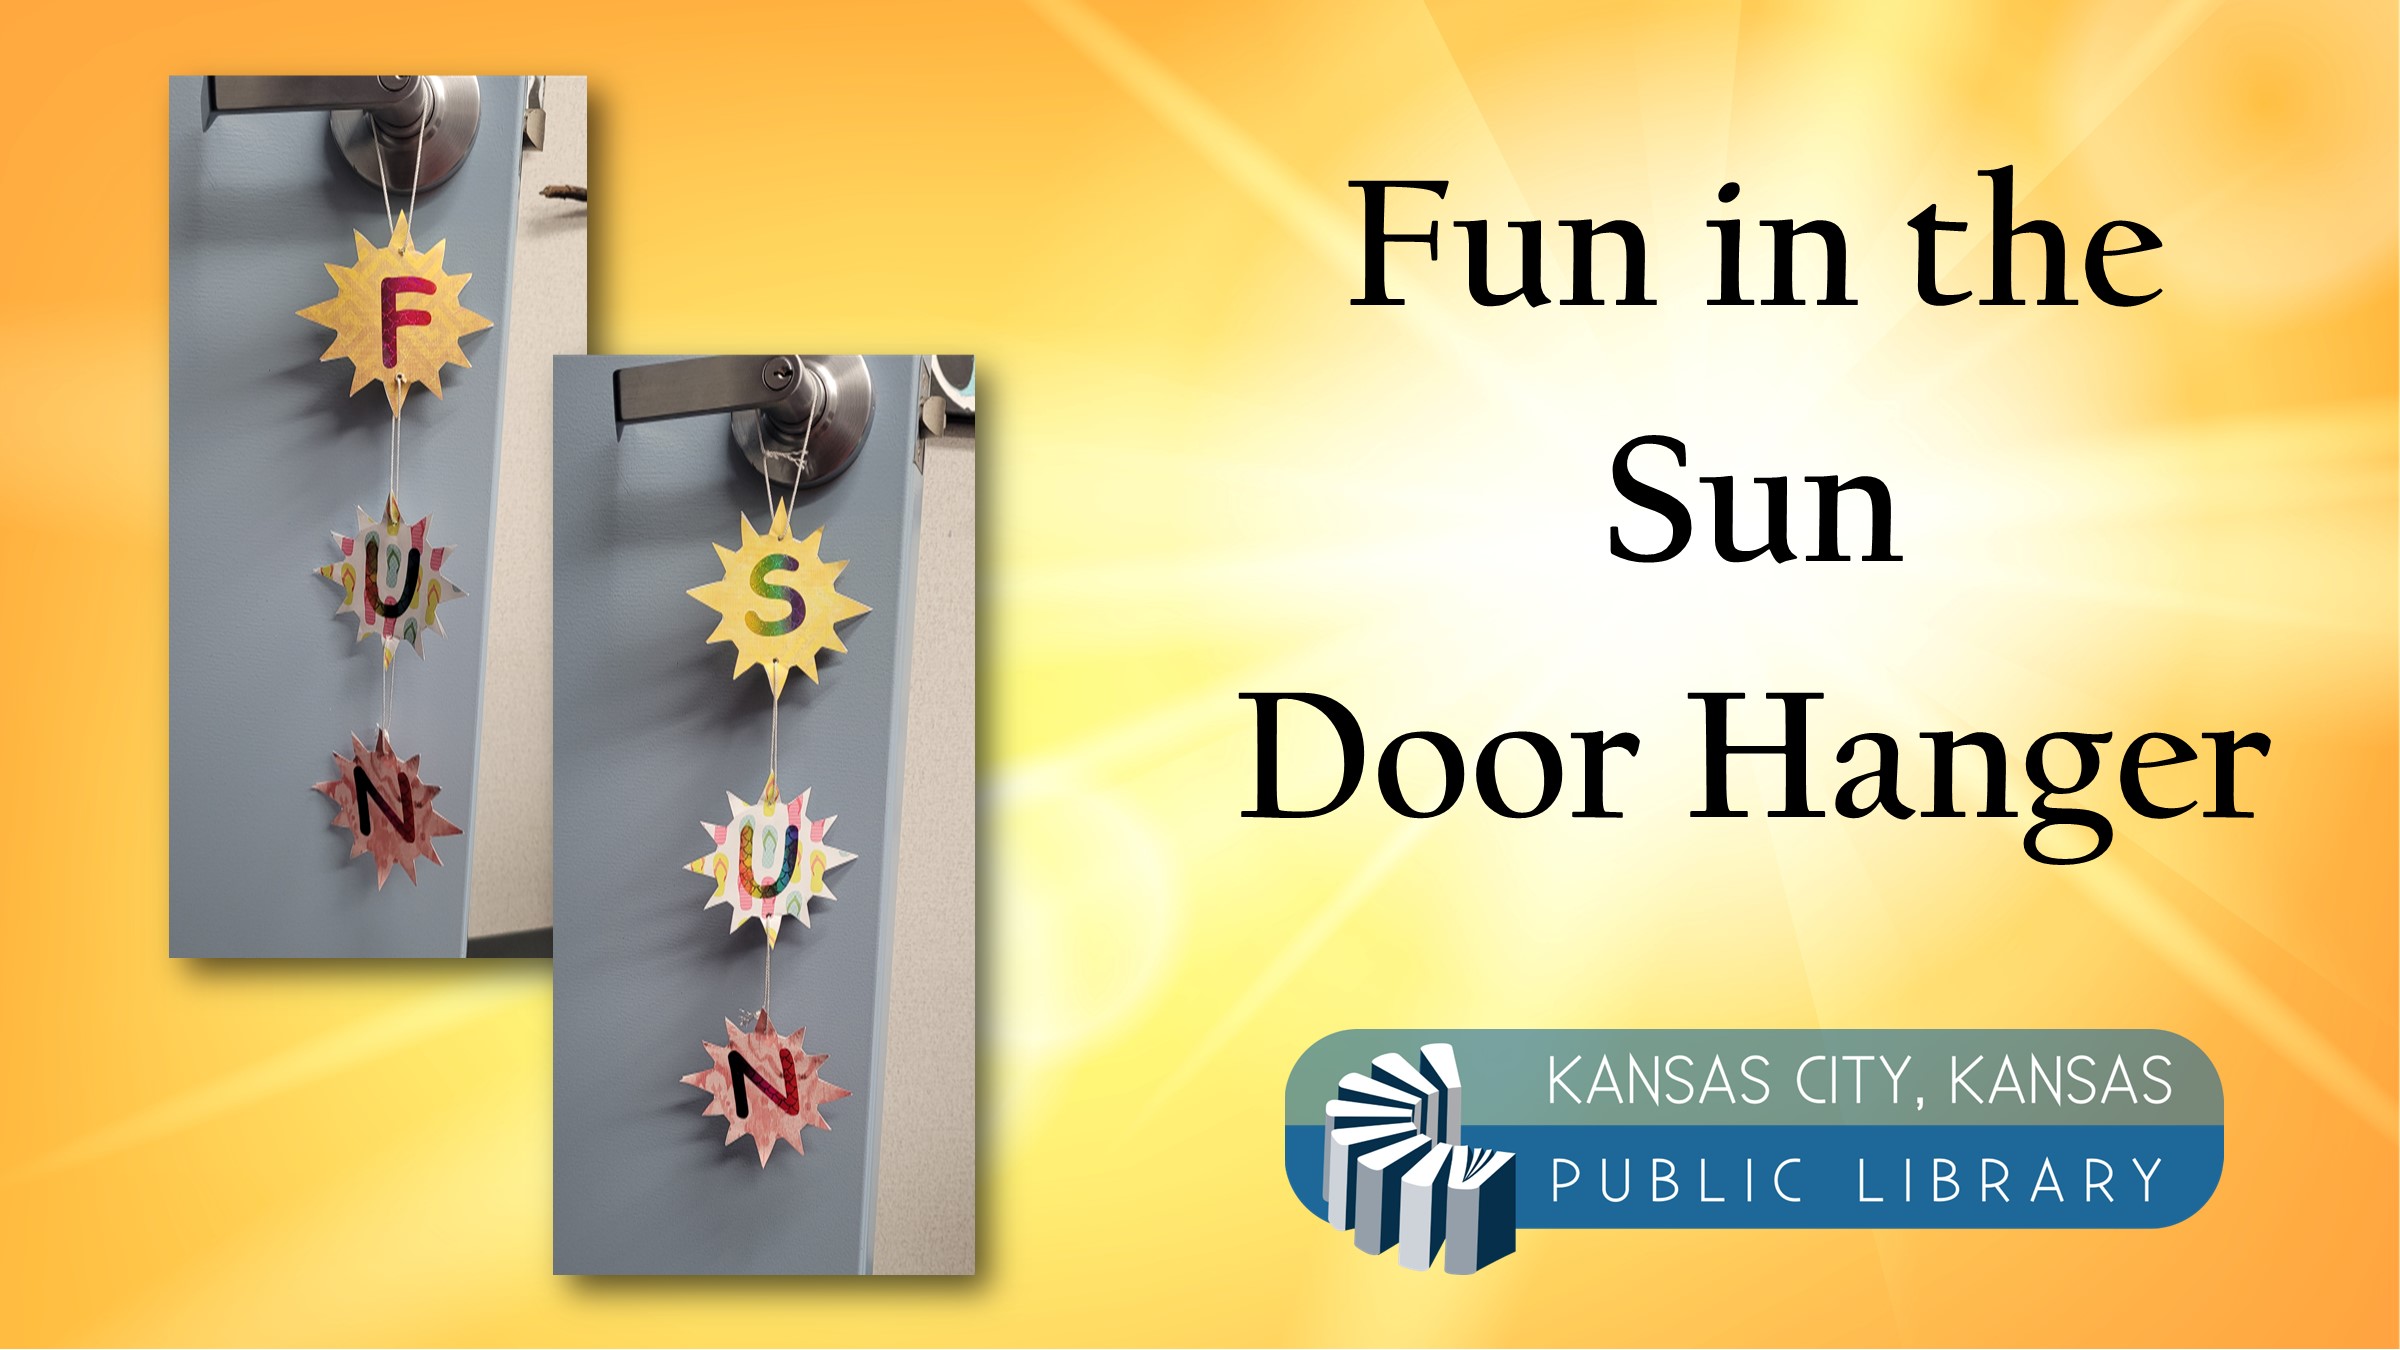 Sun-themed door hanger & library logo on a sunny background